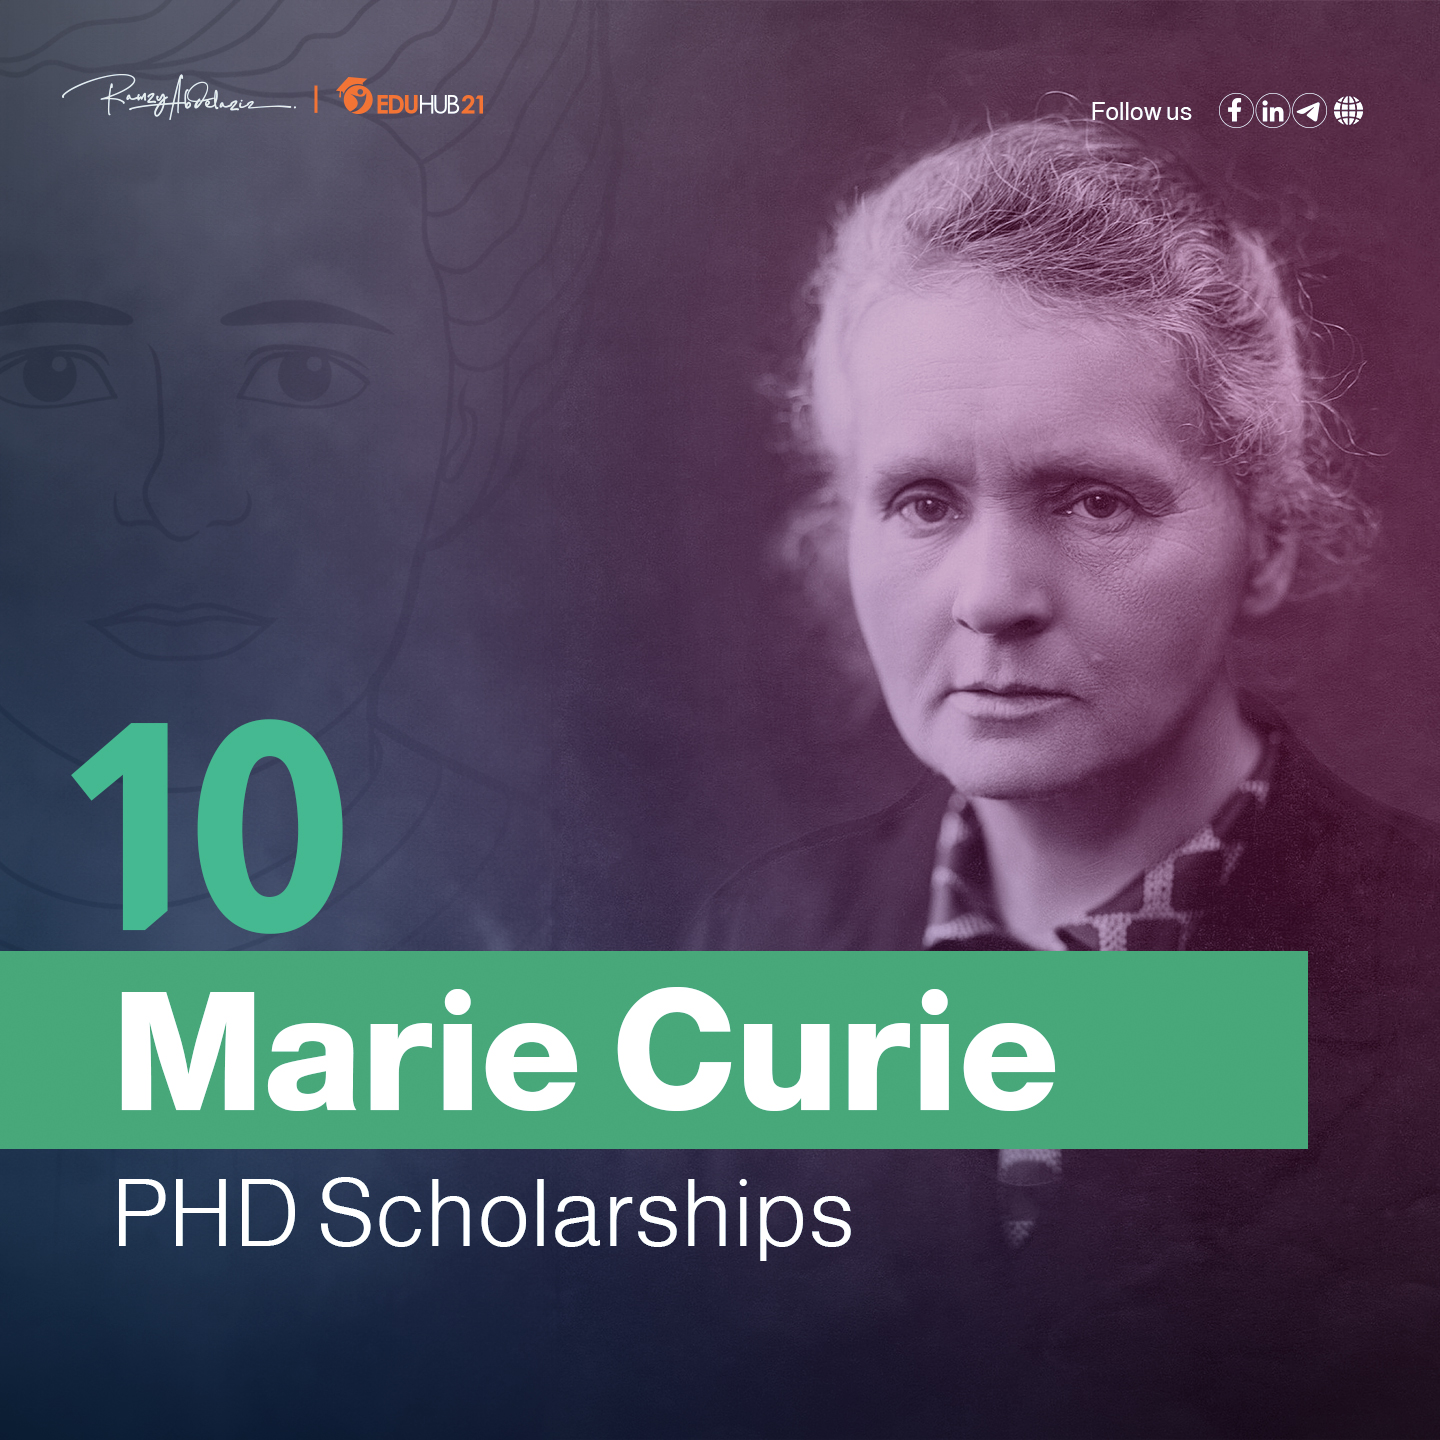 marie curie scholarship phd uk